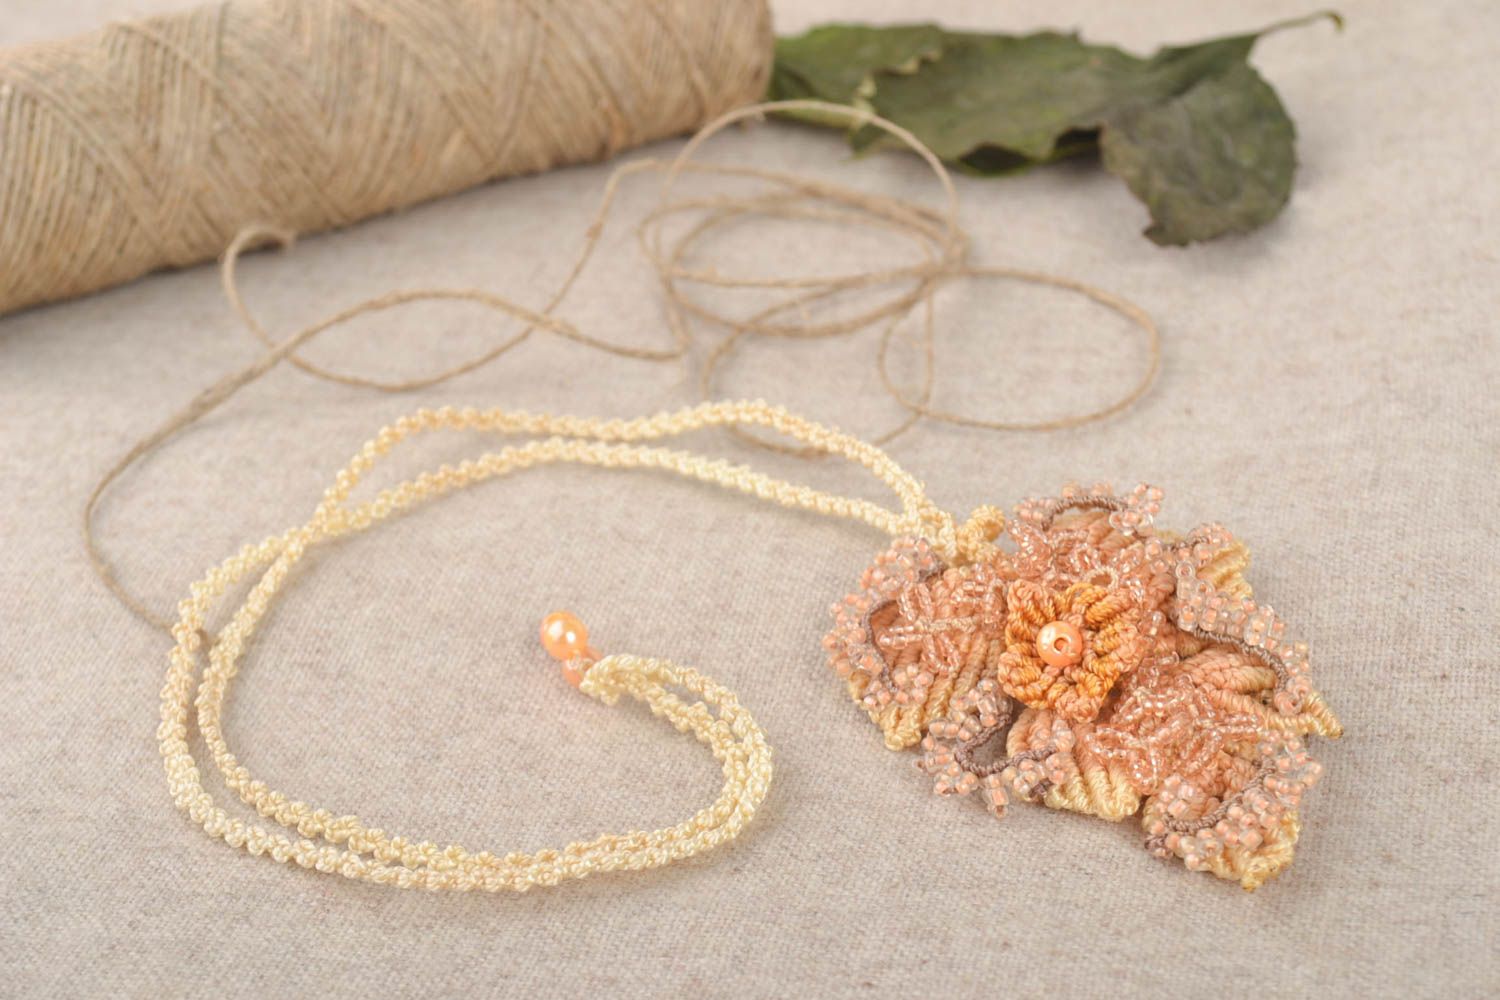 Handmade pendant designer pendant macrame jewelry unusual gift beads pendant photo 1